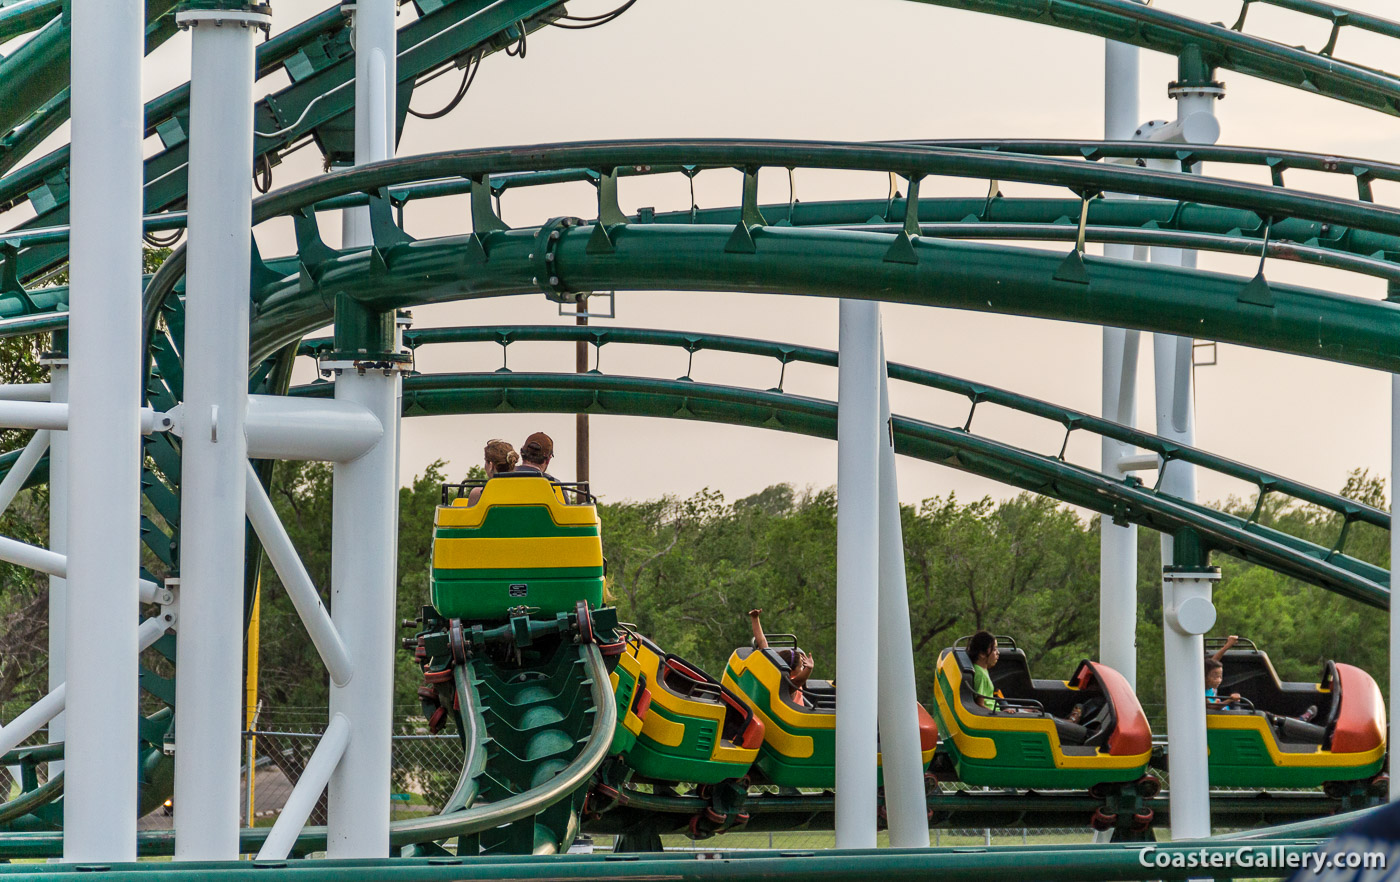 Hornet roller coaster at the Wonderland amusement park